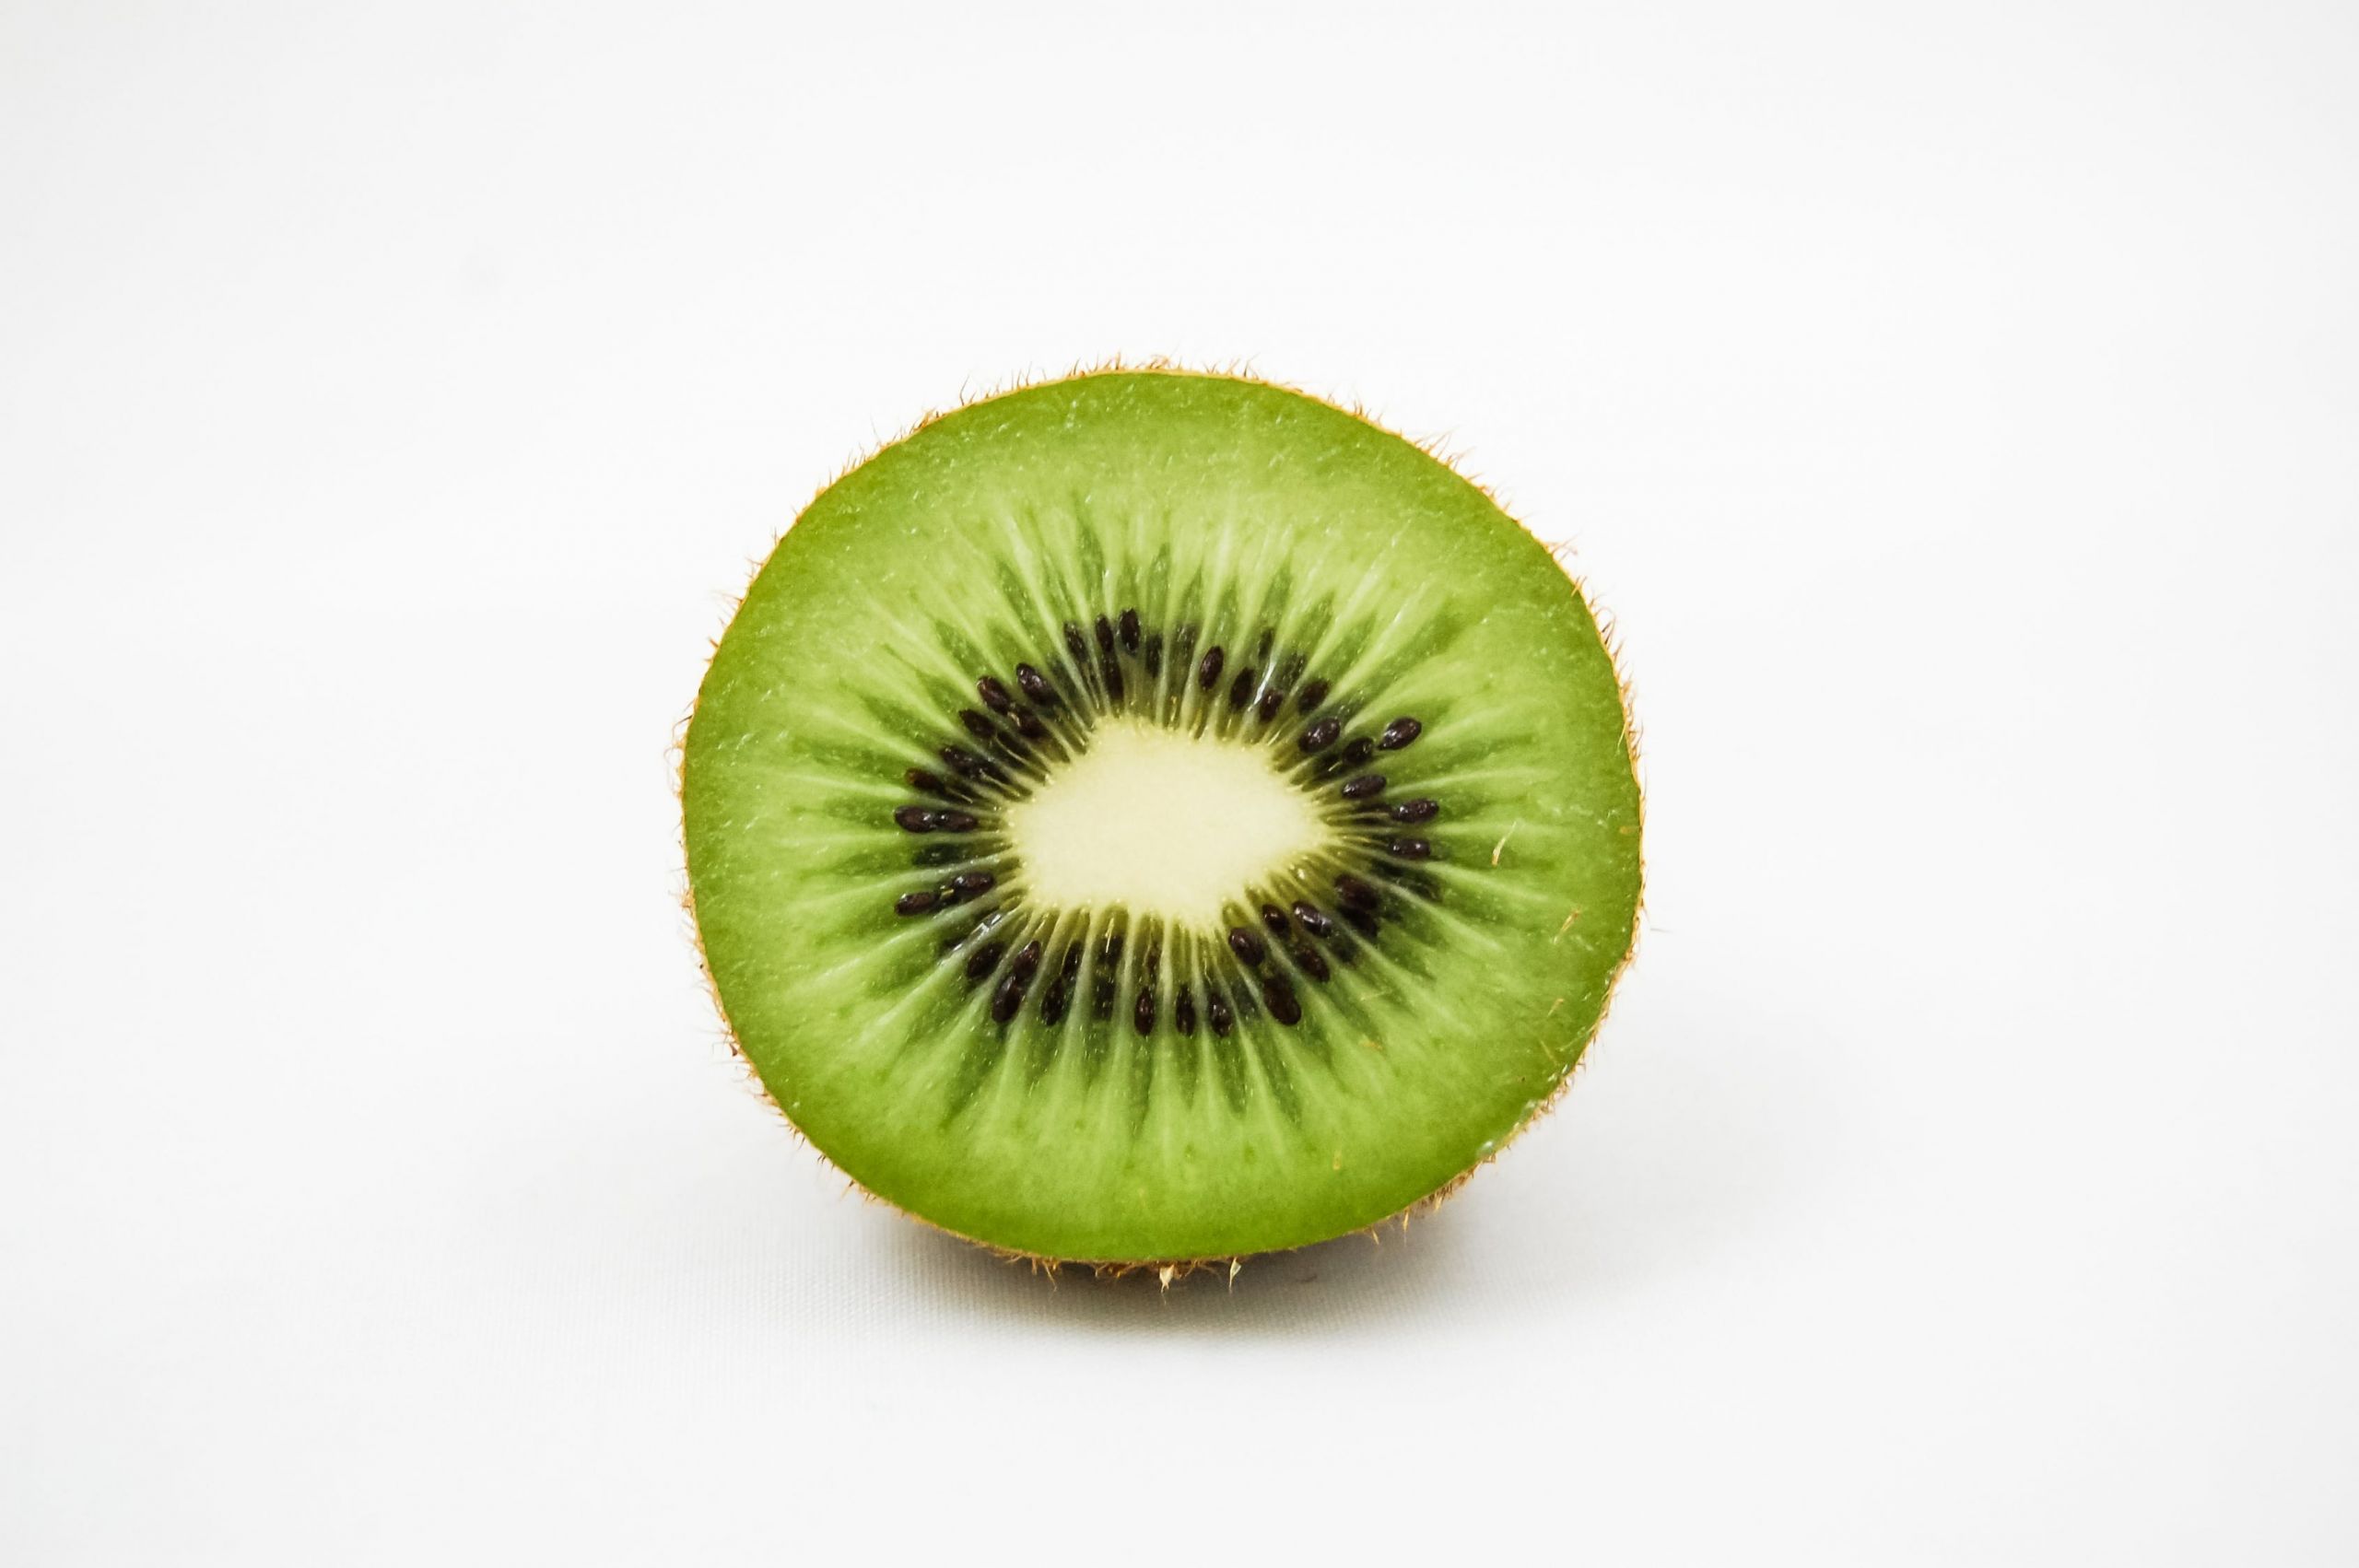 kiwi-fruit-vitamins-healthy-eating-51312-pexels-scaled.jpeg